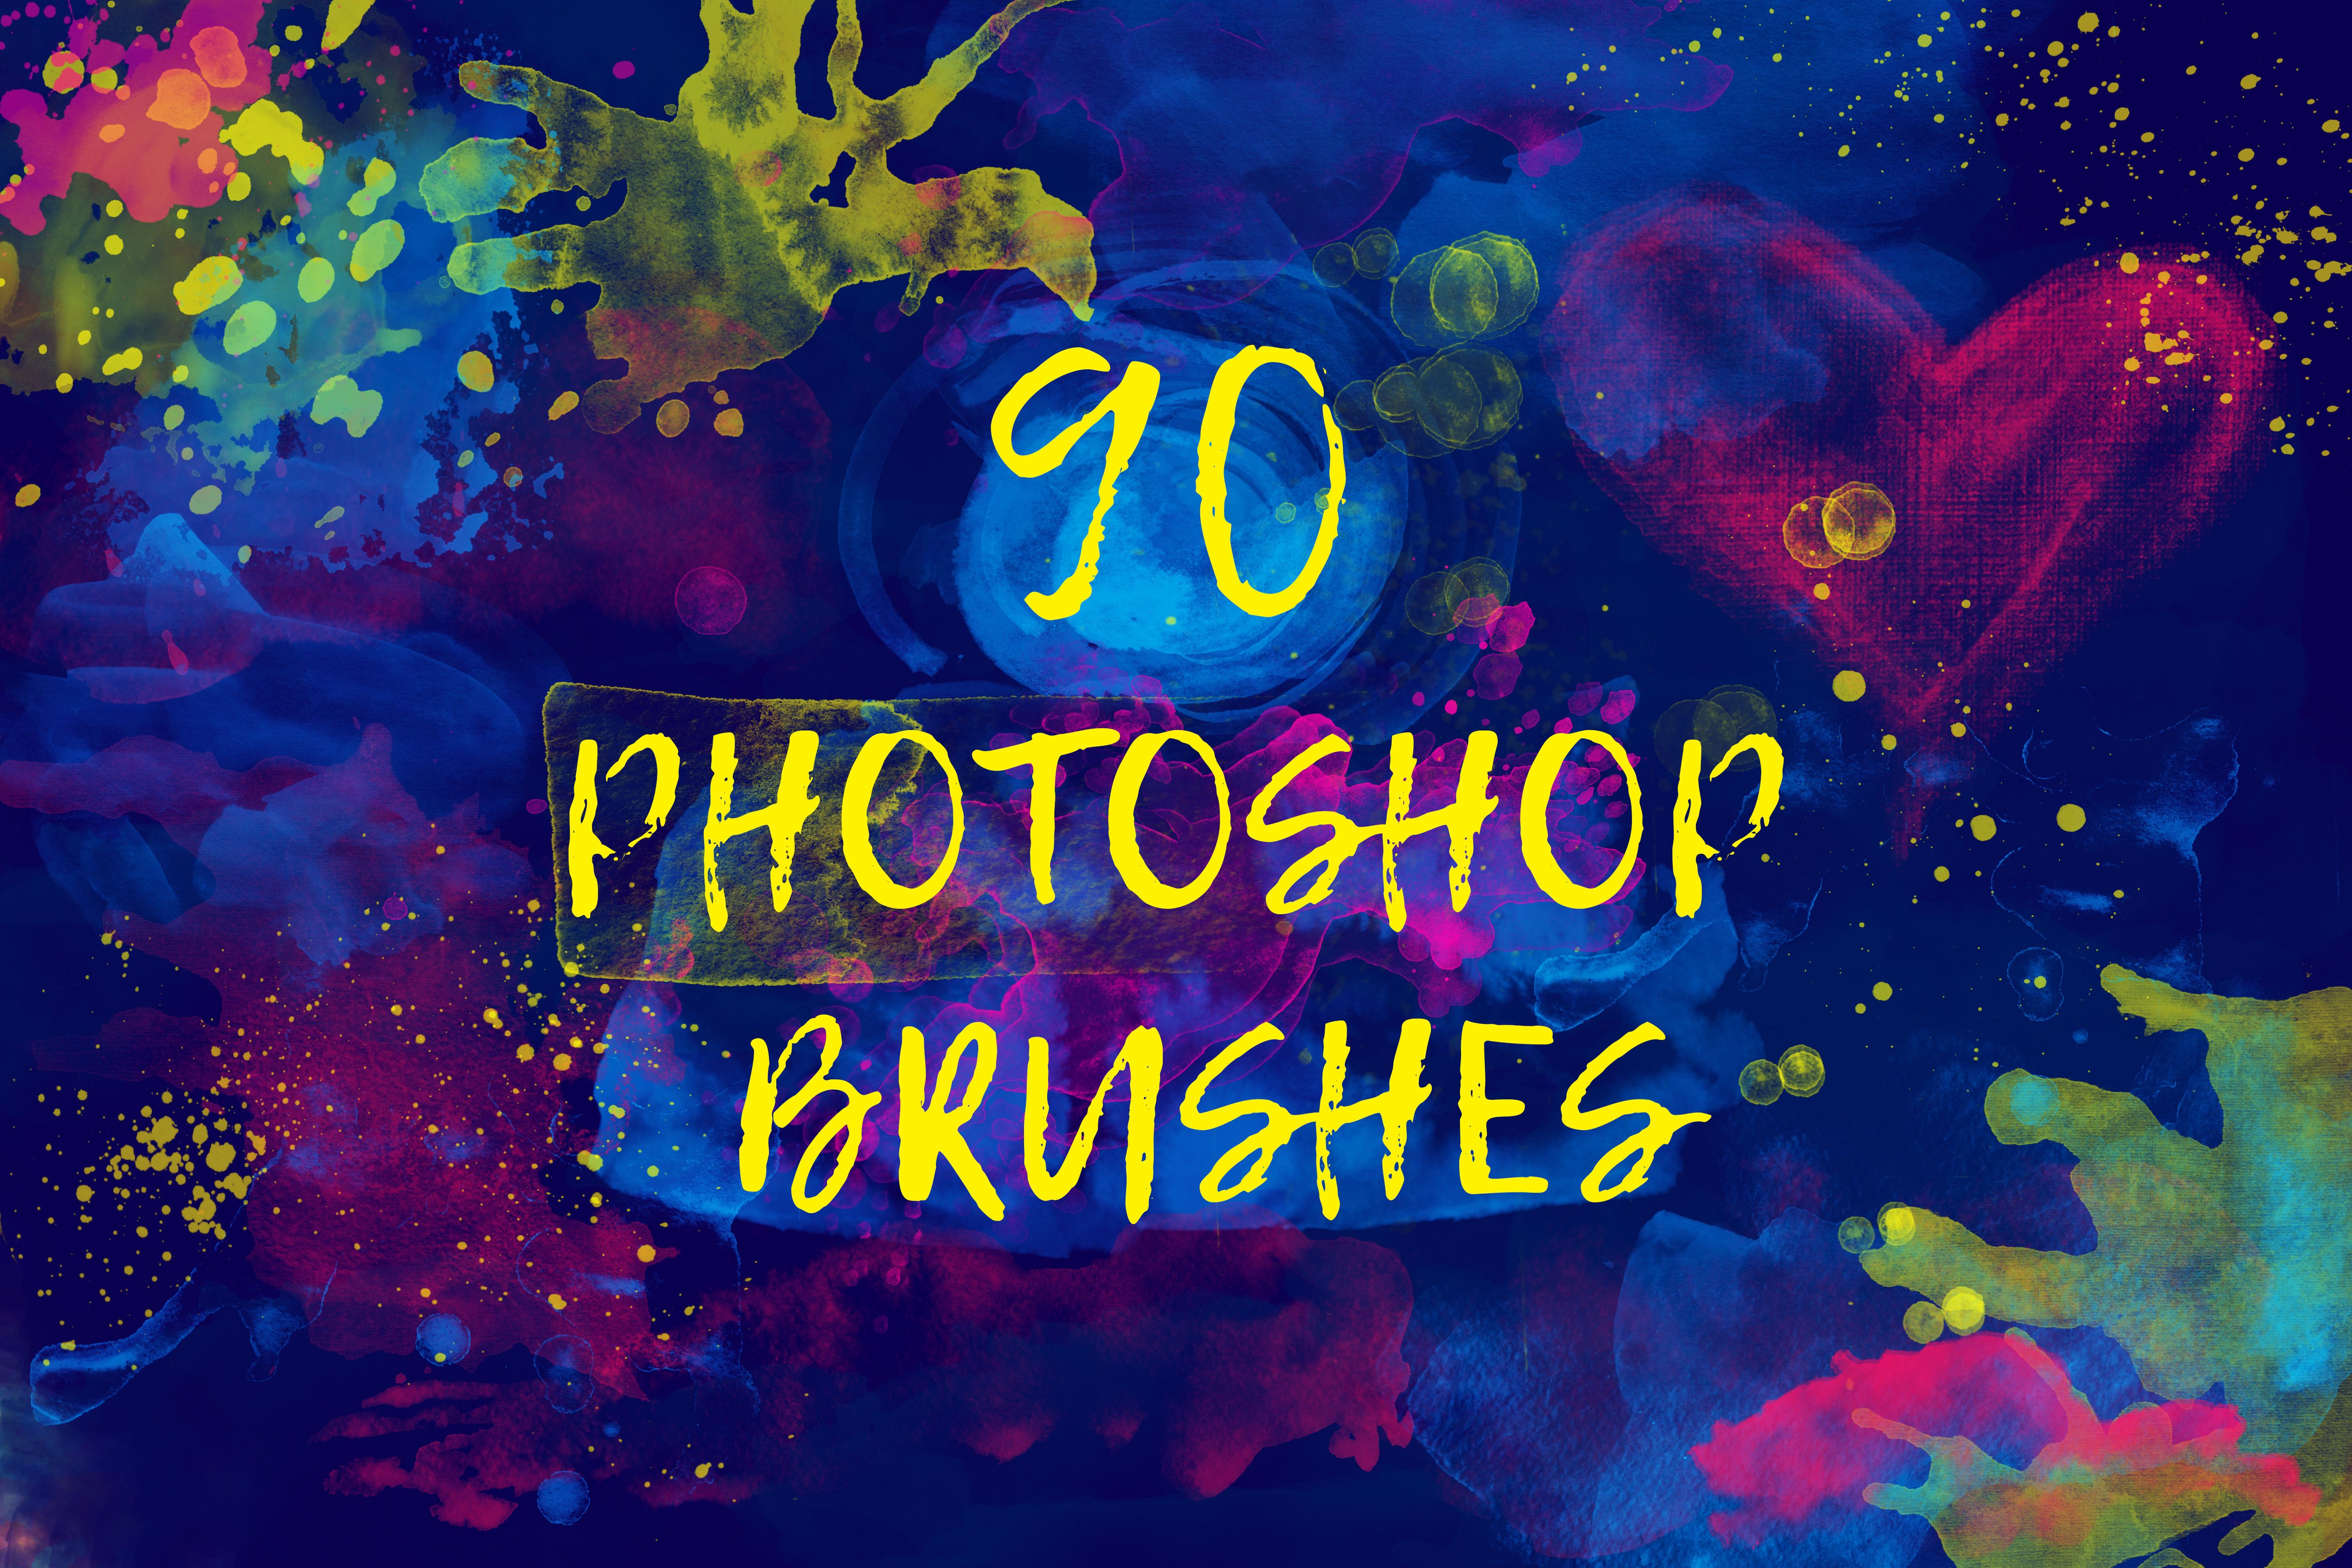 90 Photoshop Watercolor Brushescover image.